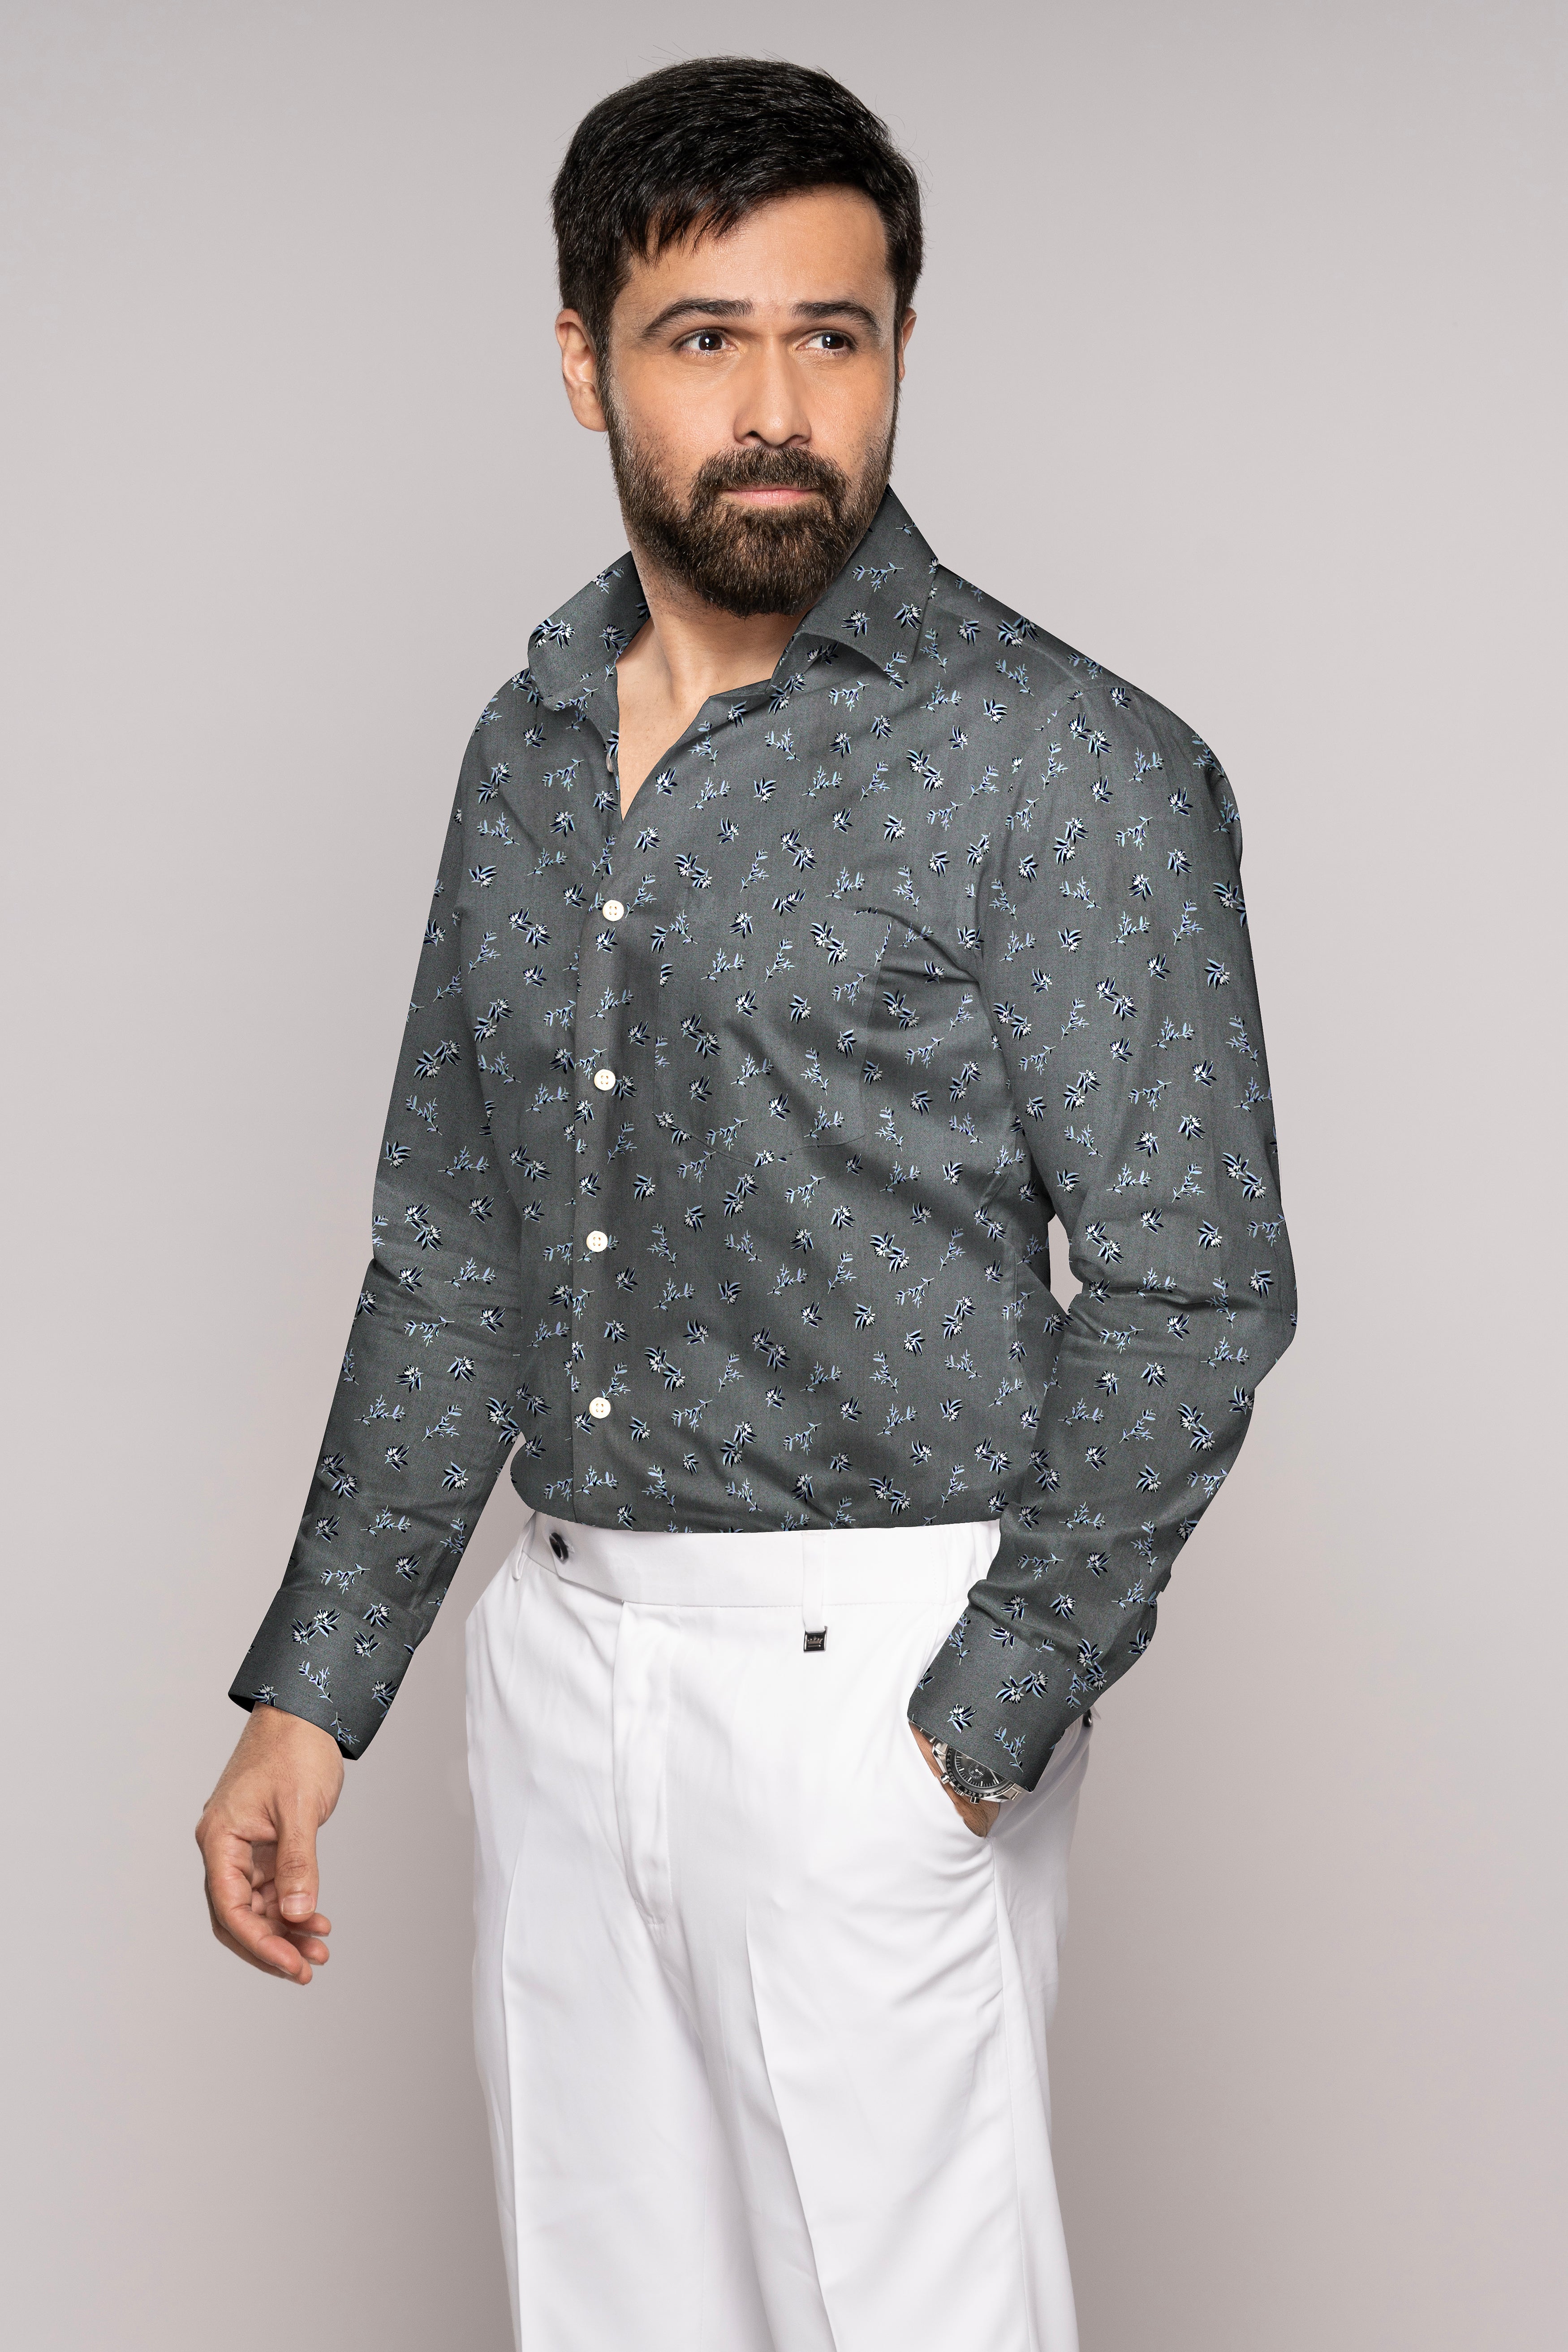 Gunsmoke Gray Leaves Printed Twill Premium Cotton Shirt